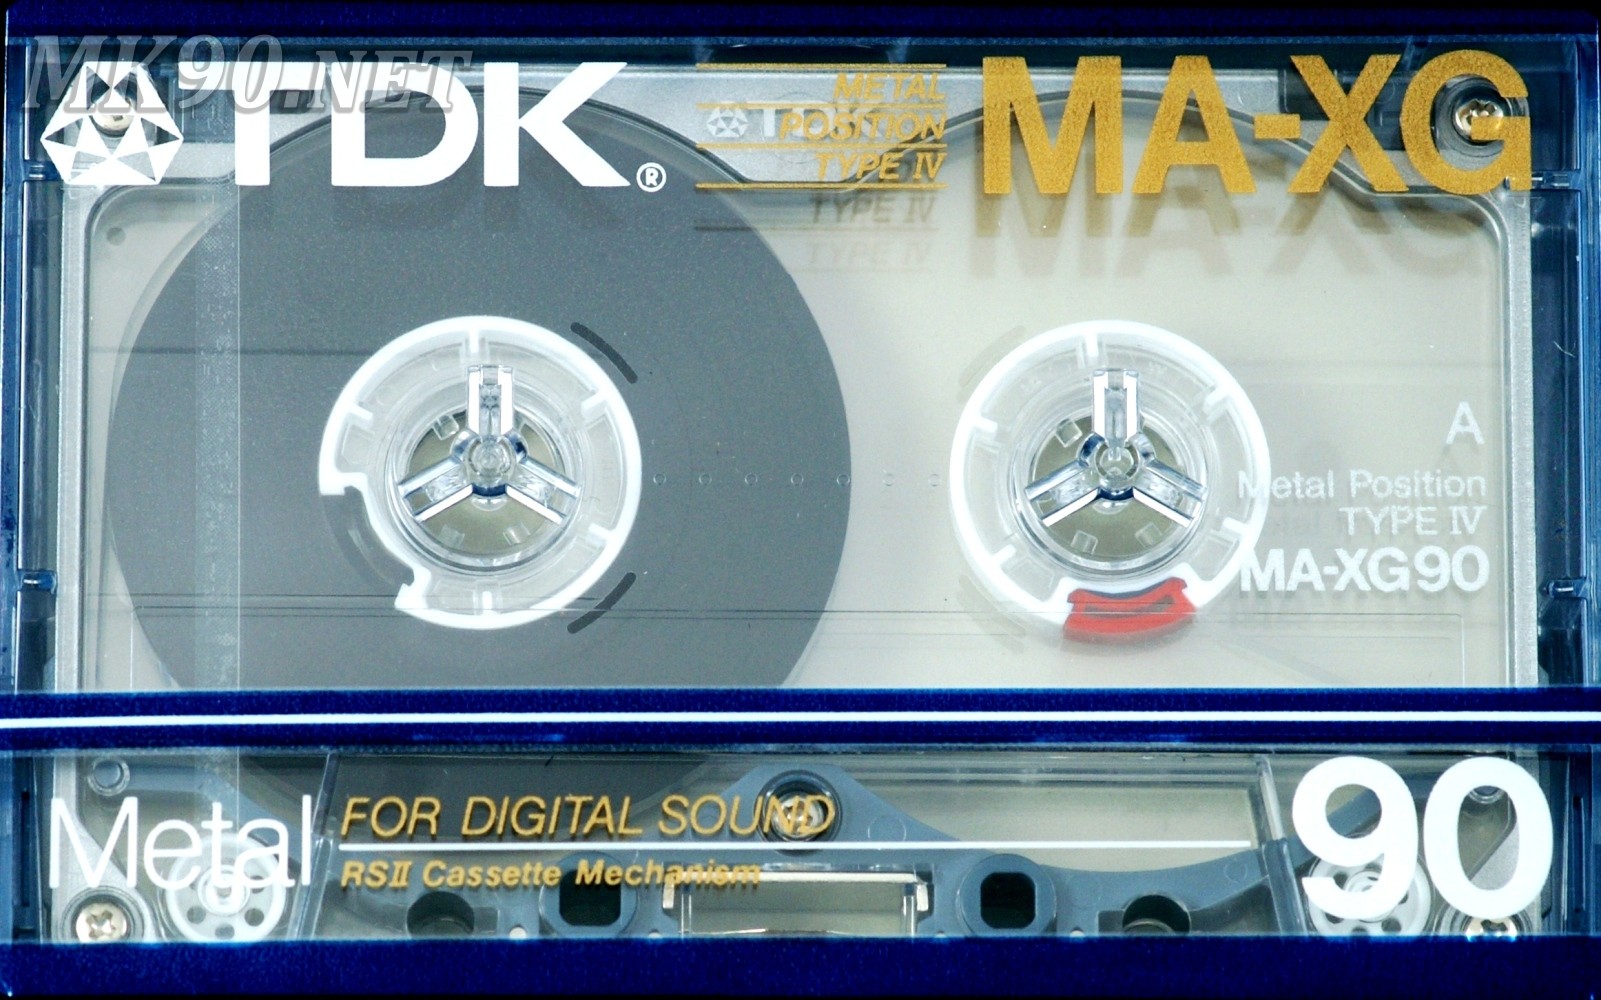 TDK-MA-XG90 1986-88.